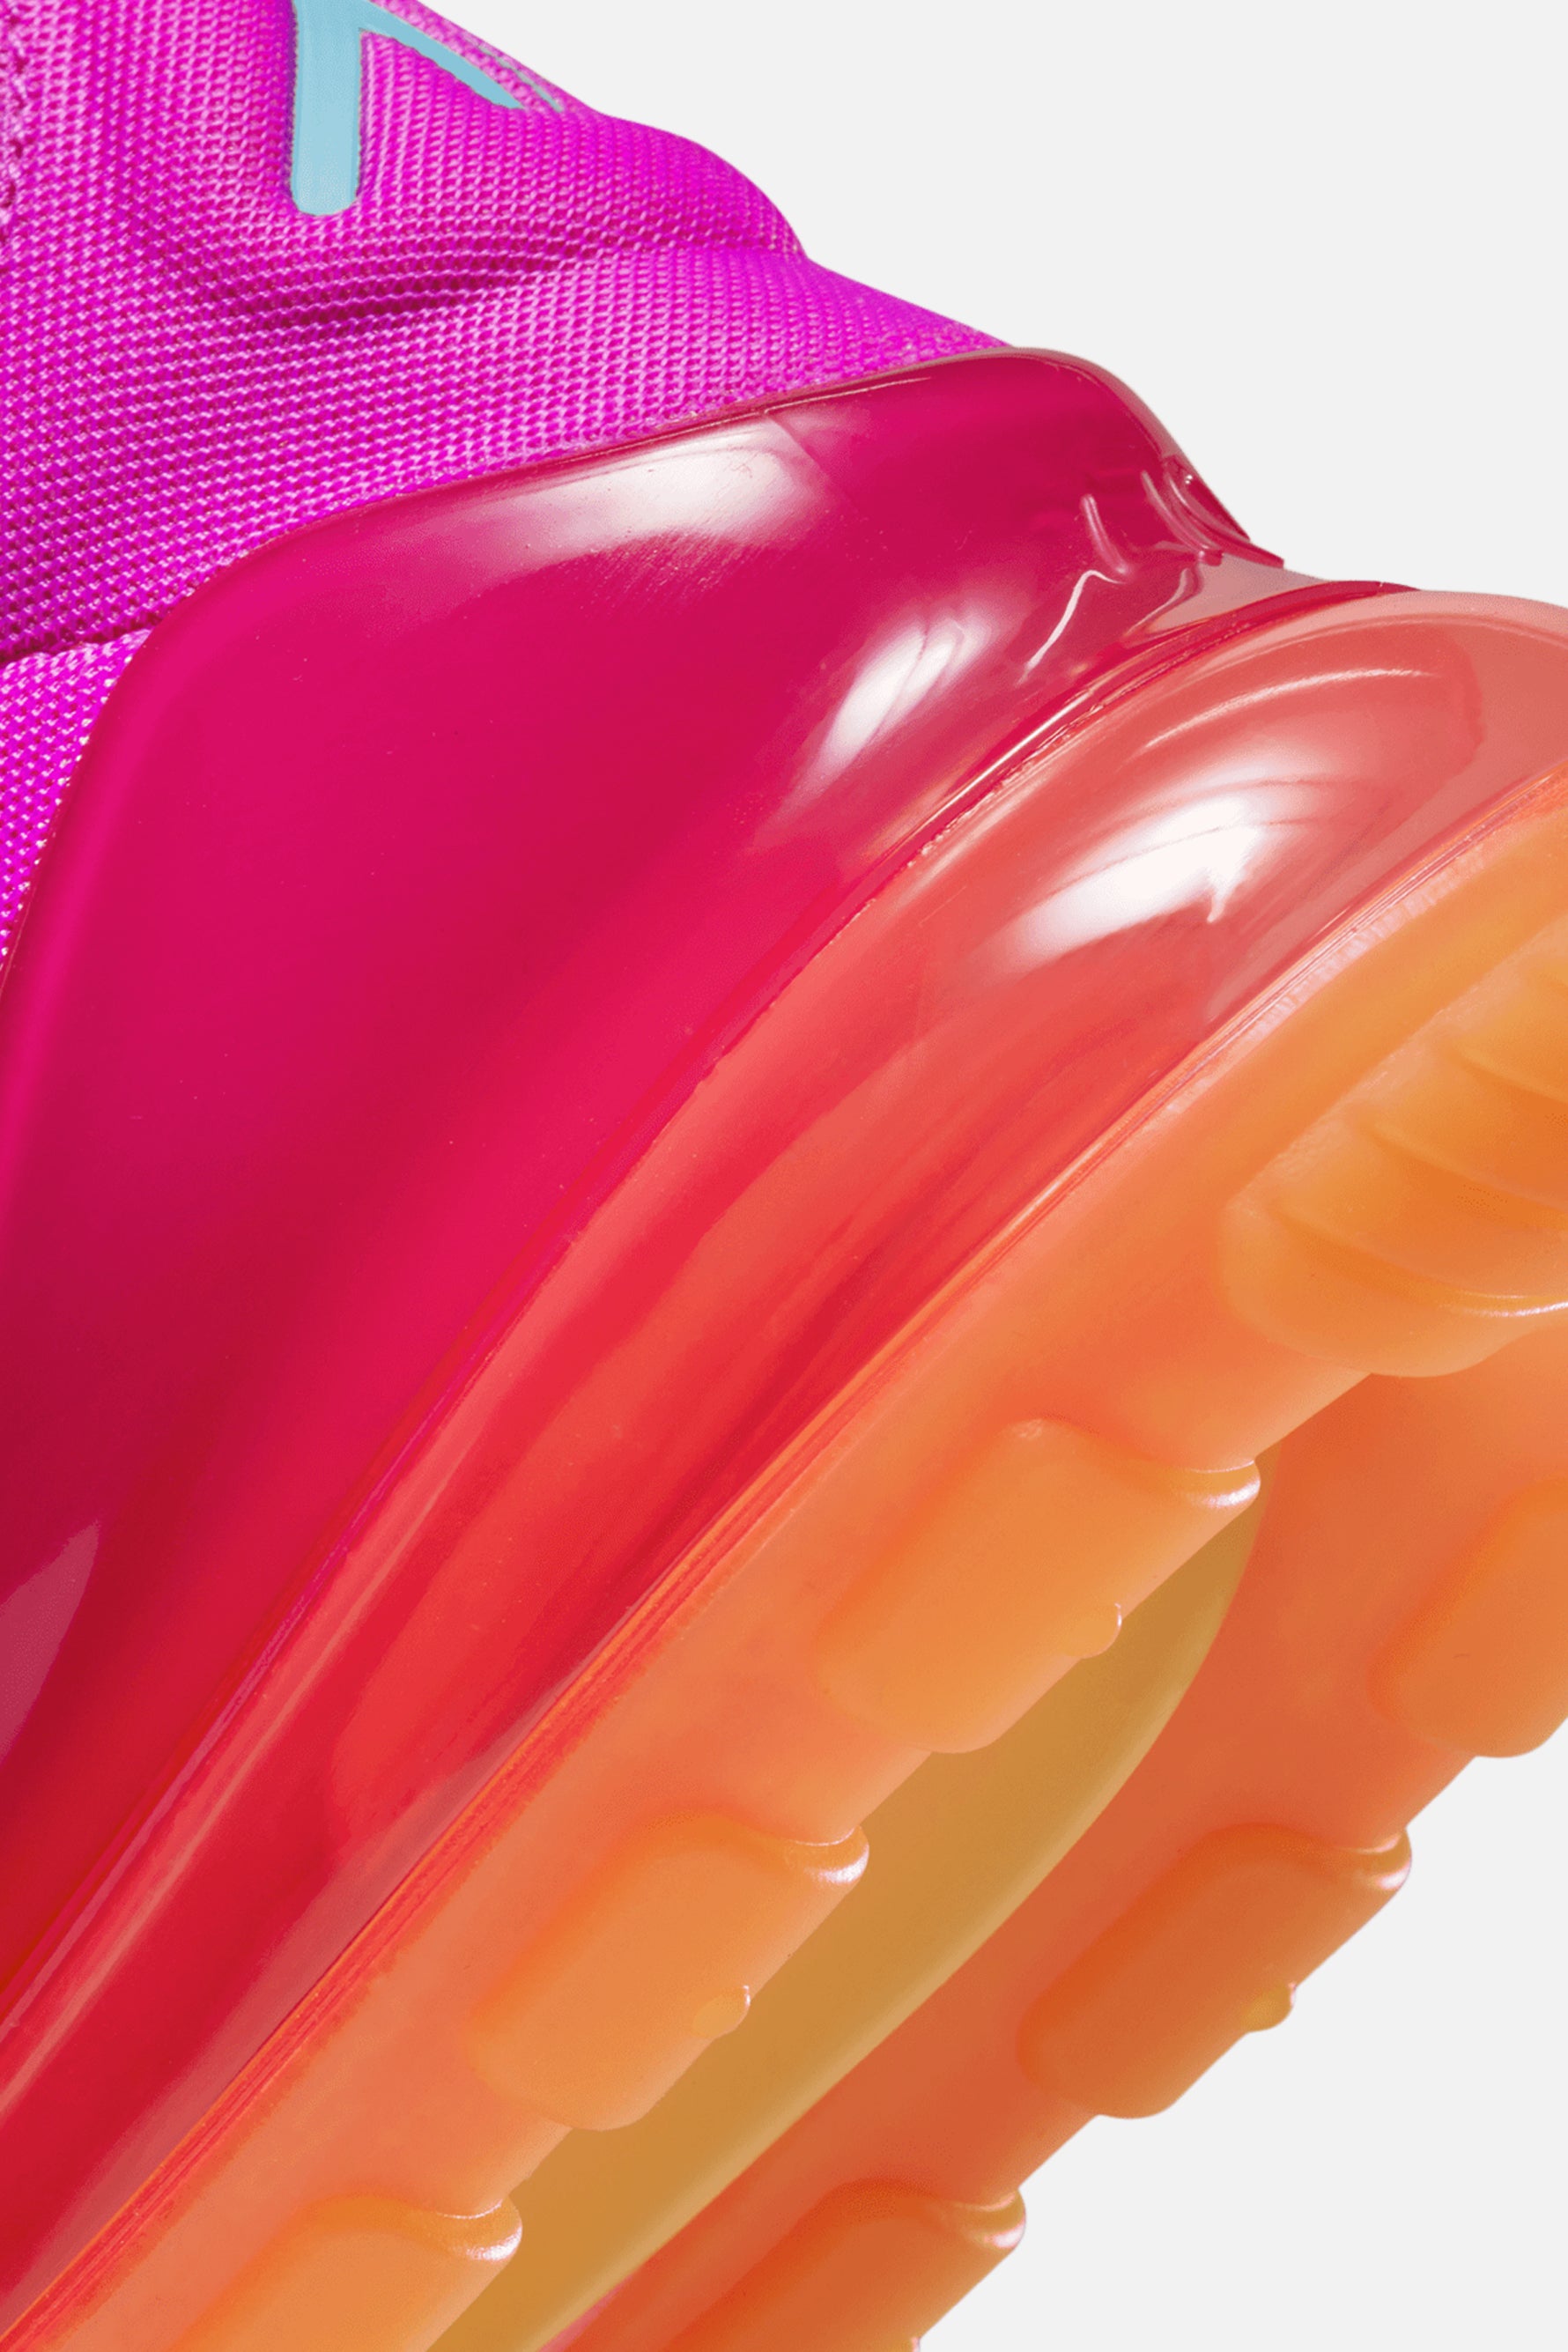 UhfmrShops - nike free run shoes for women 270 React 'Hyper Pink